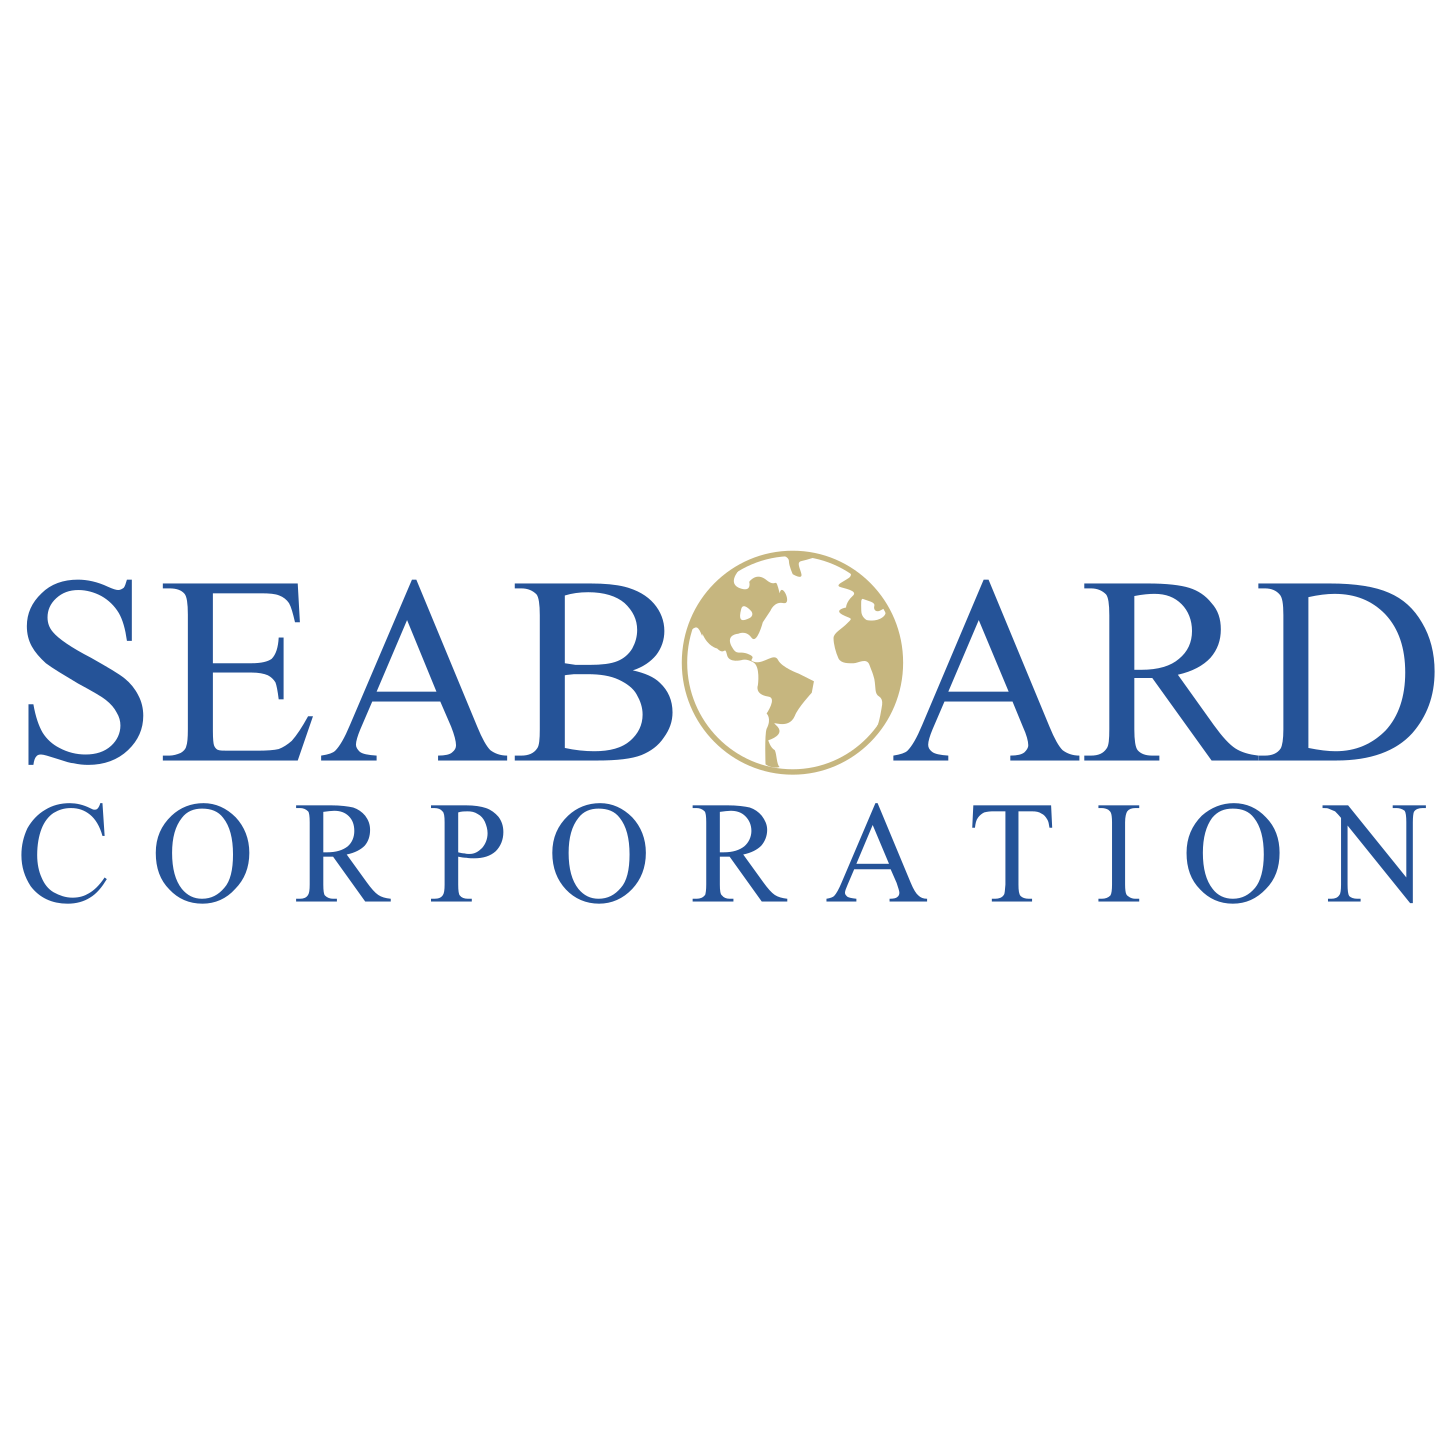 Seaboard Vector Logo - Download Free SVG Icon | Worldvectorlogo